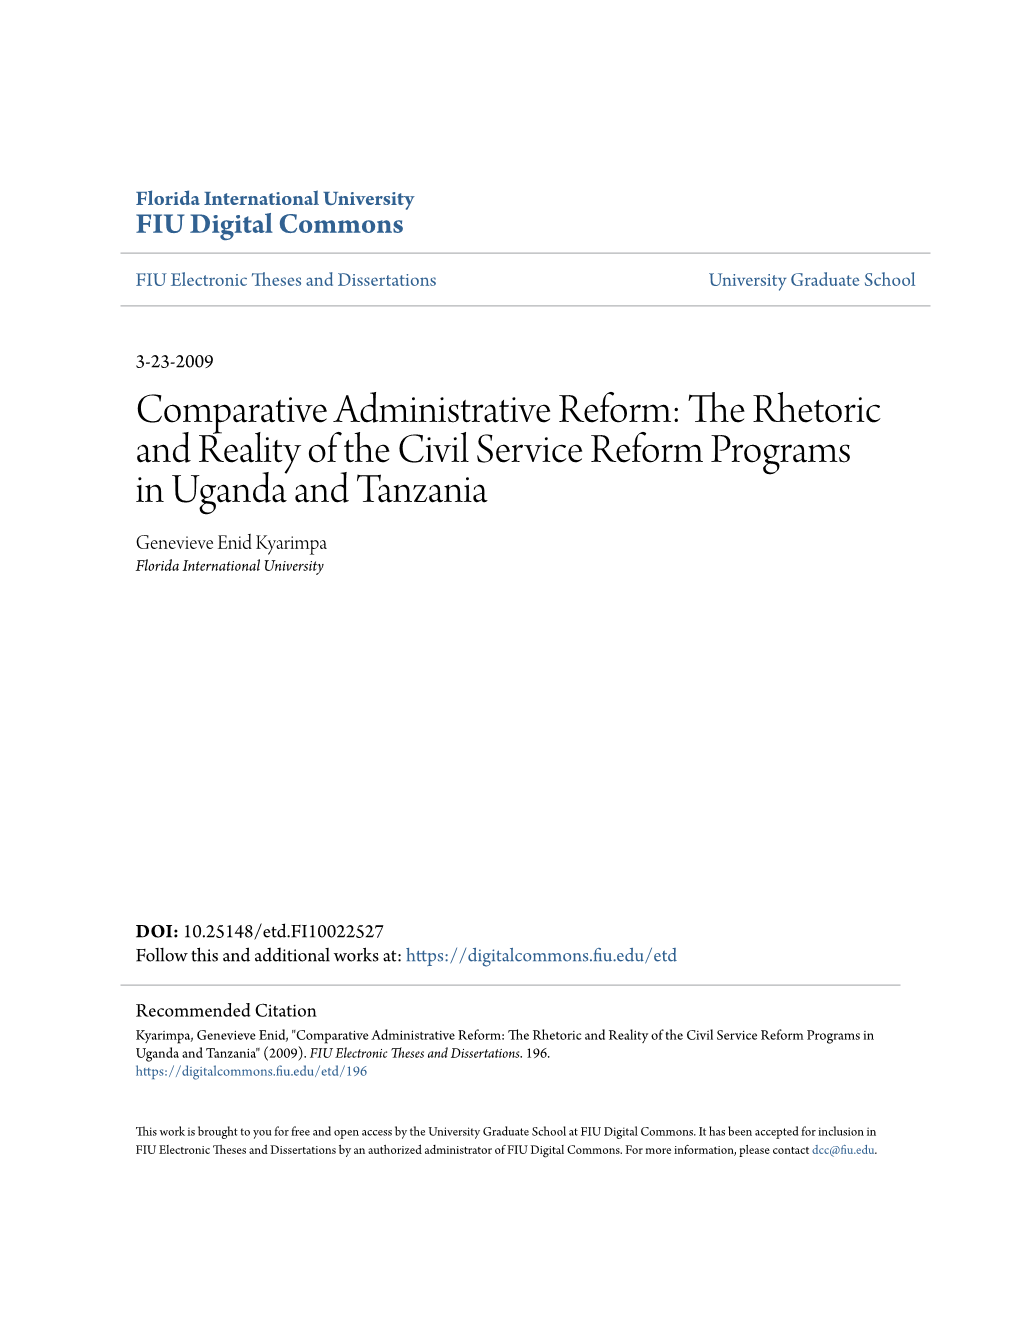 Comparative Administrative Reform